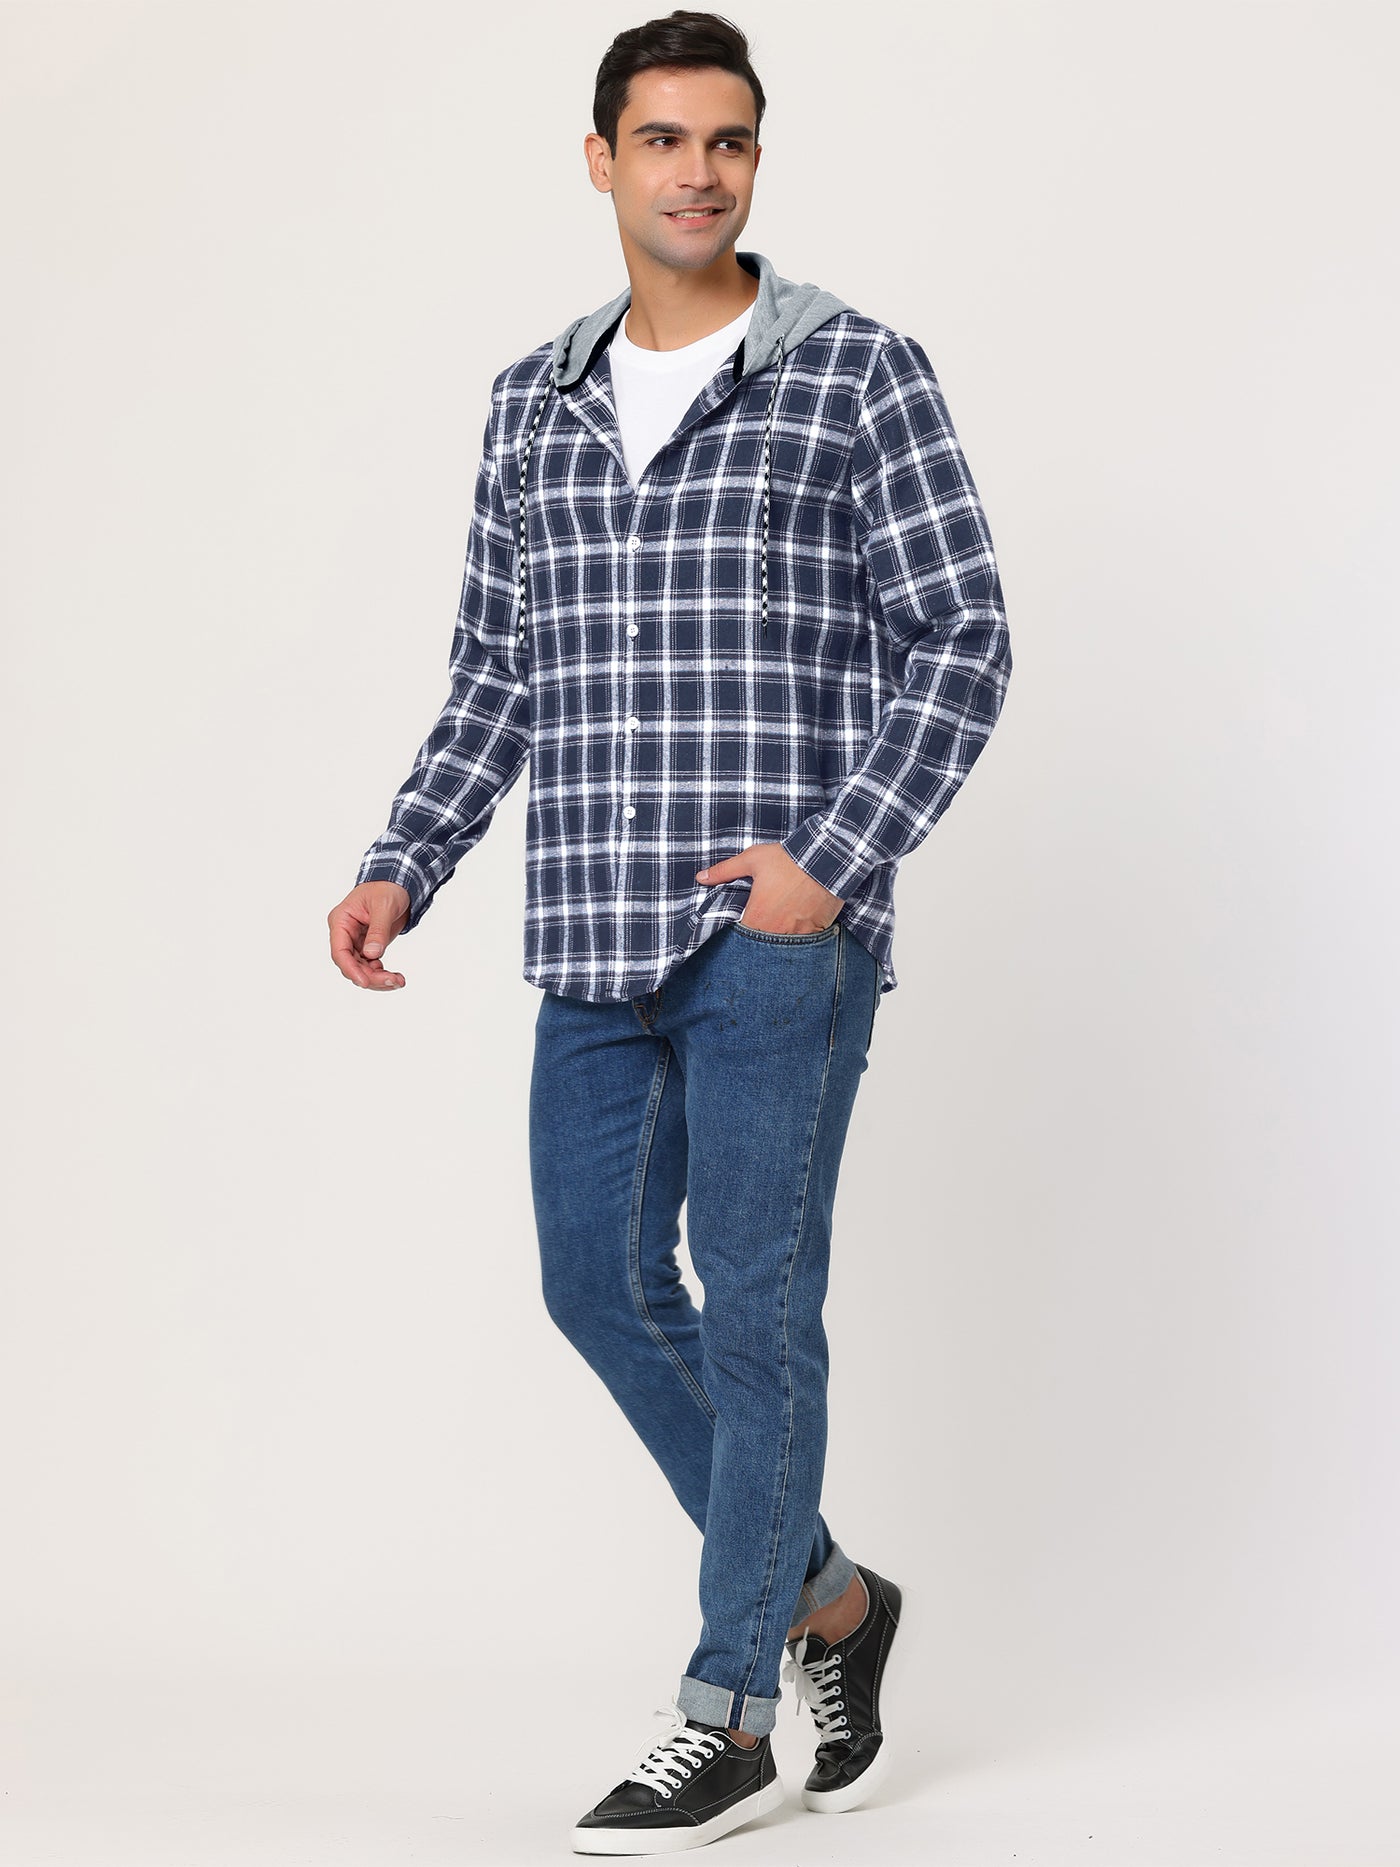 Bublédon Men's Hoodies Plaid Shirt Long Sleeves Button Checked Drawstring Hooded Jackets